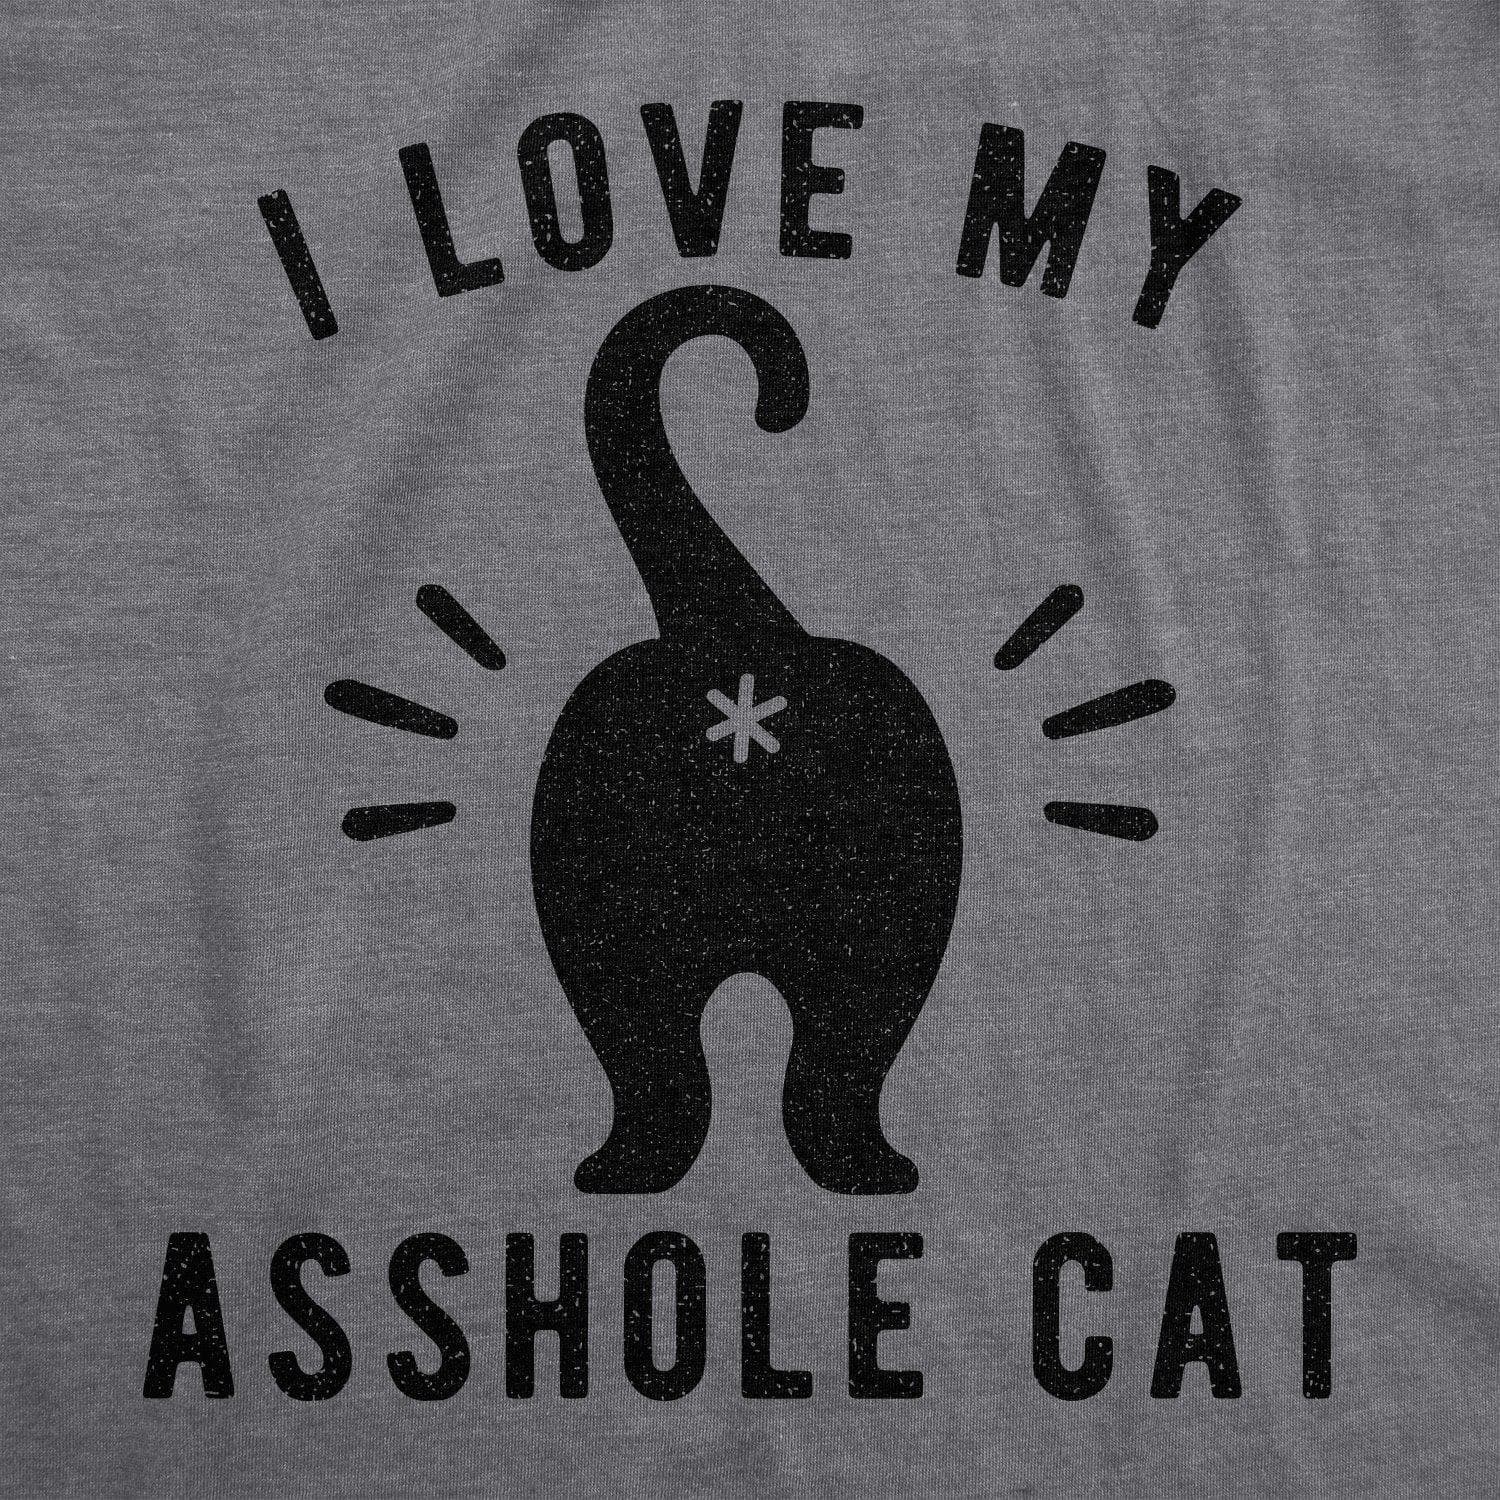 I Love My Asshole Cat Women's Tshirt - Crazy Dog T-Shirts